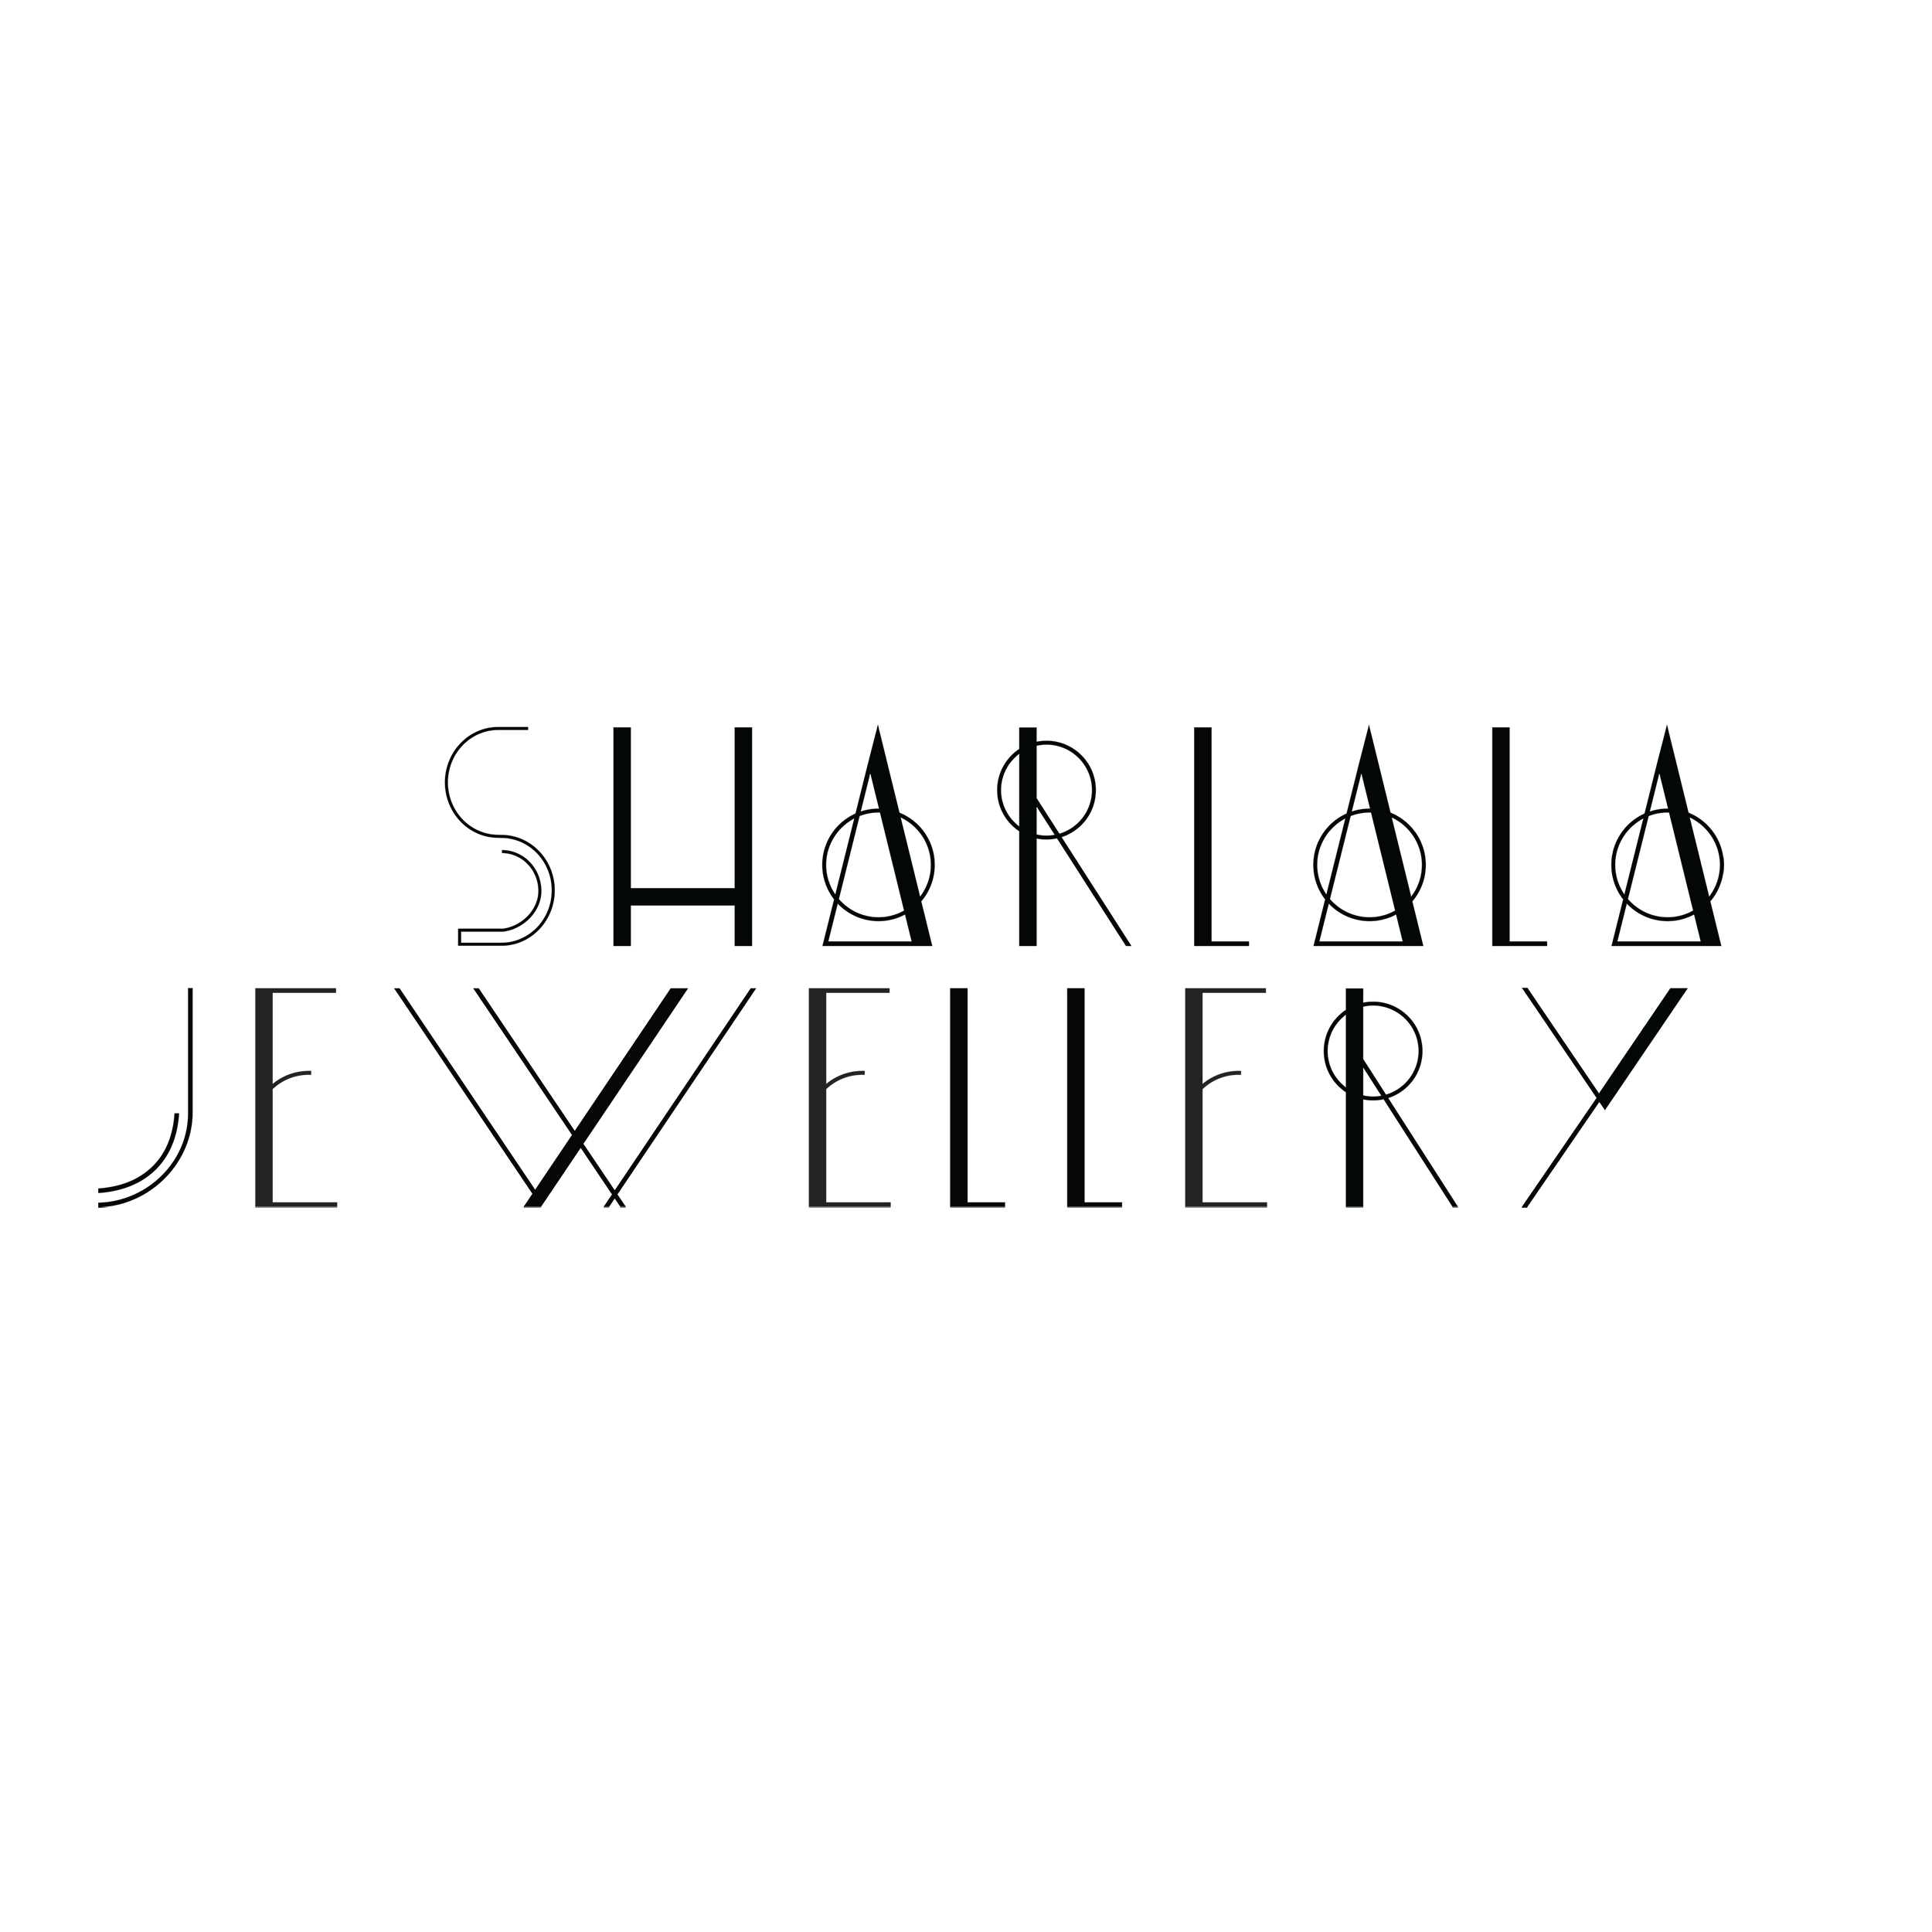 Sharlala_Logo